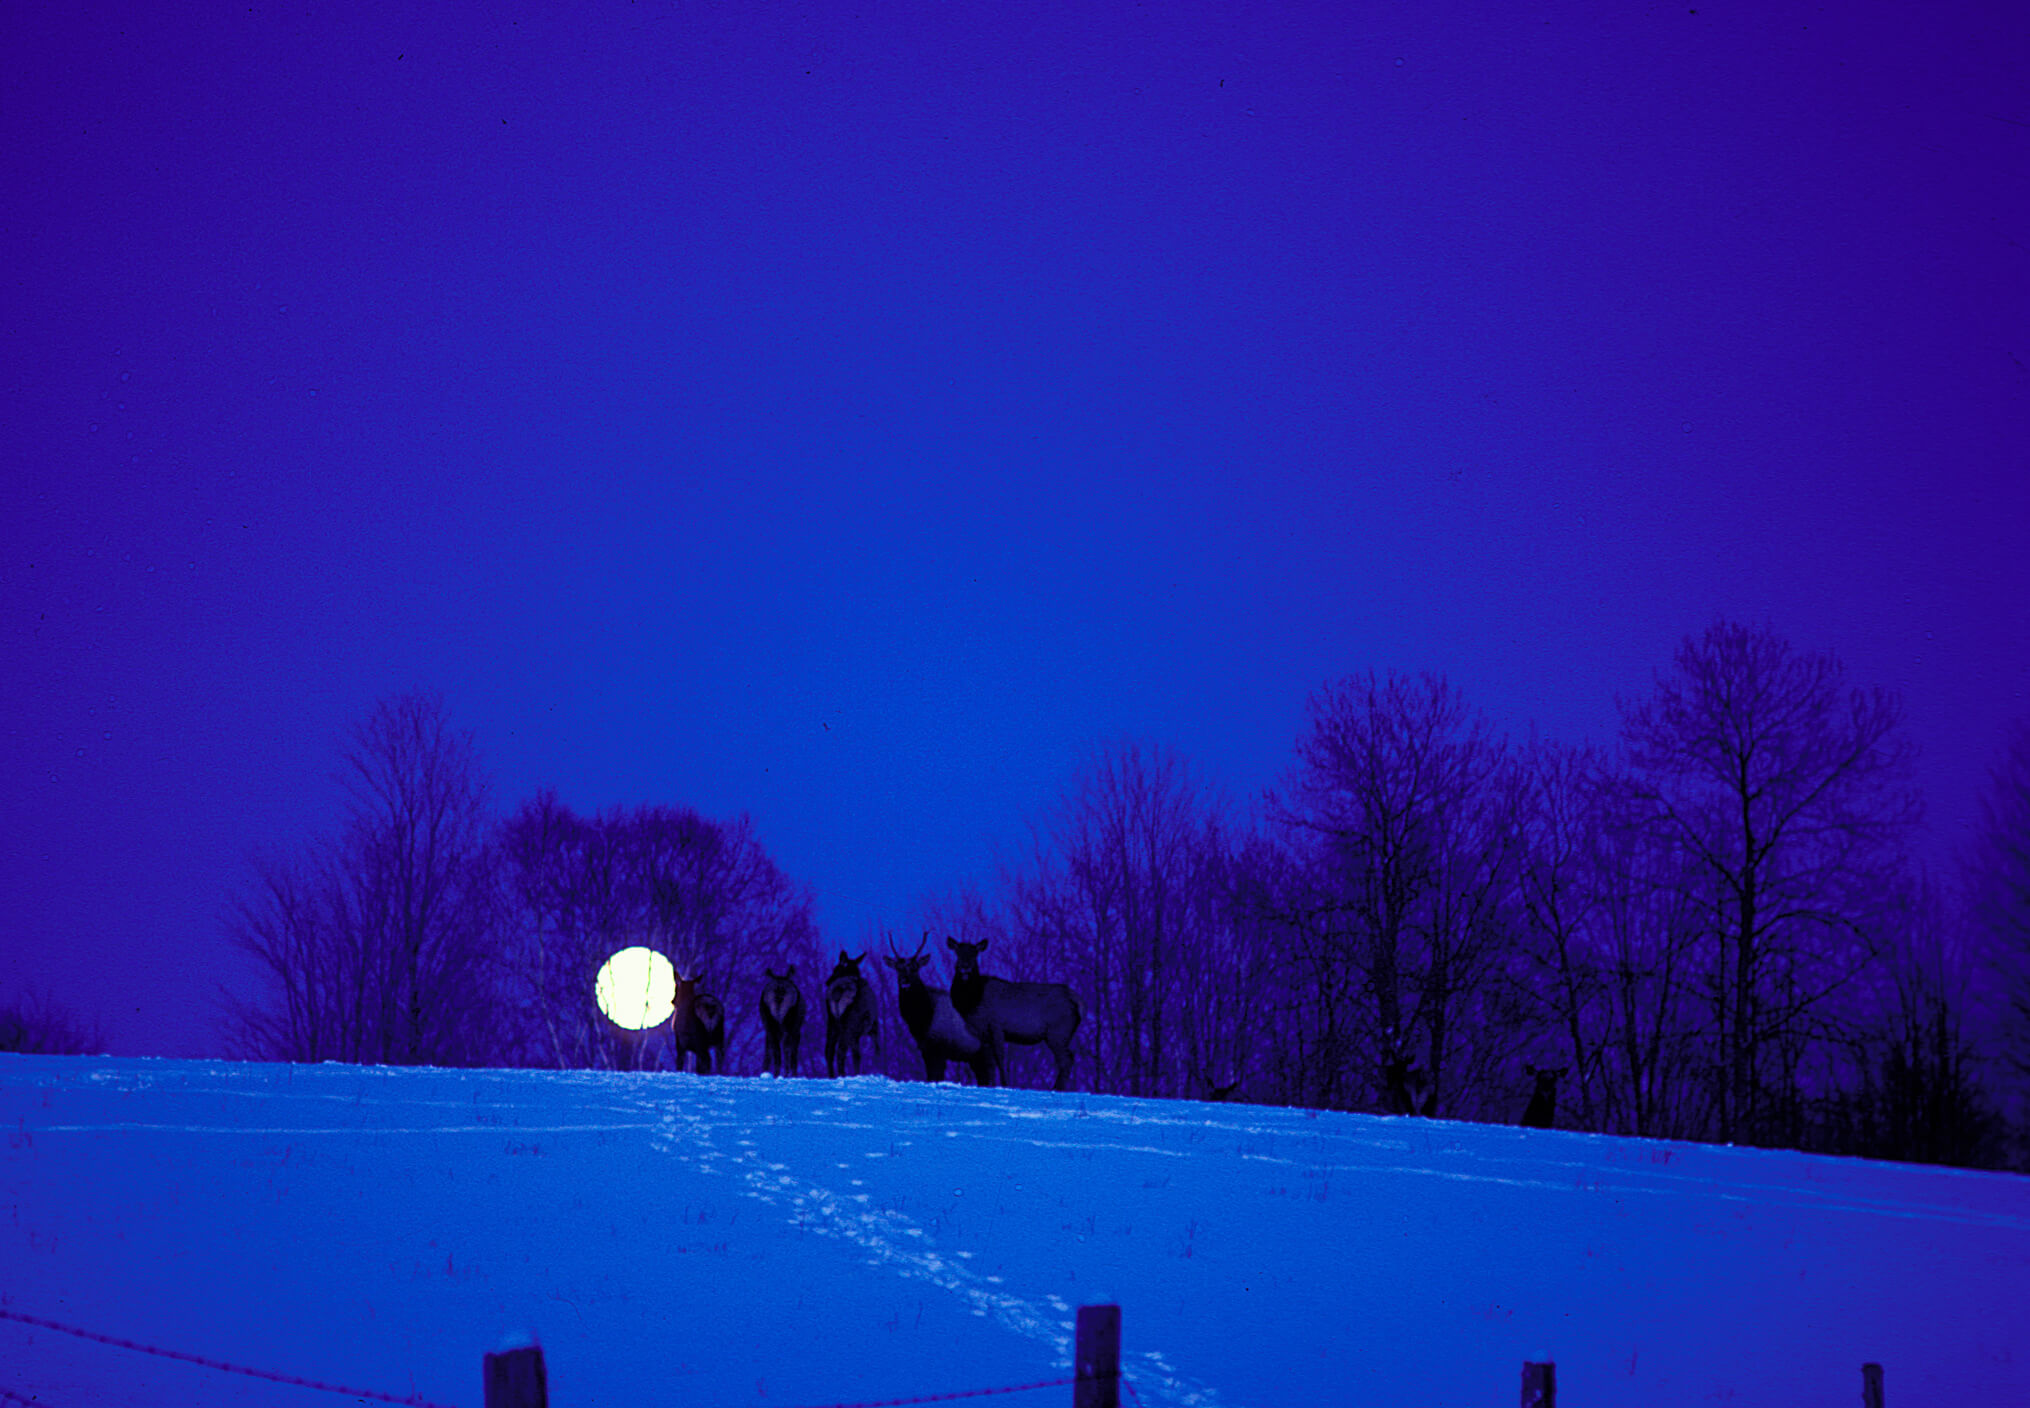 Michigan elk in a snowy field as the moon rises